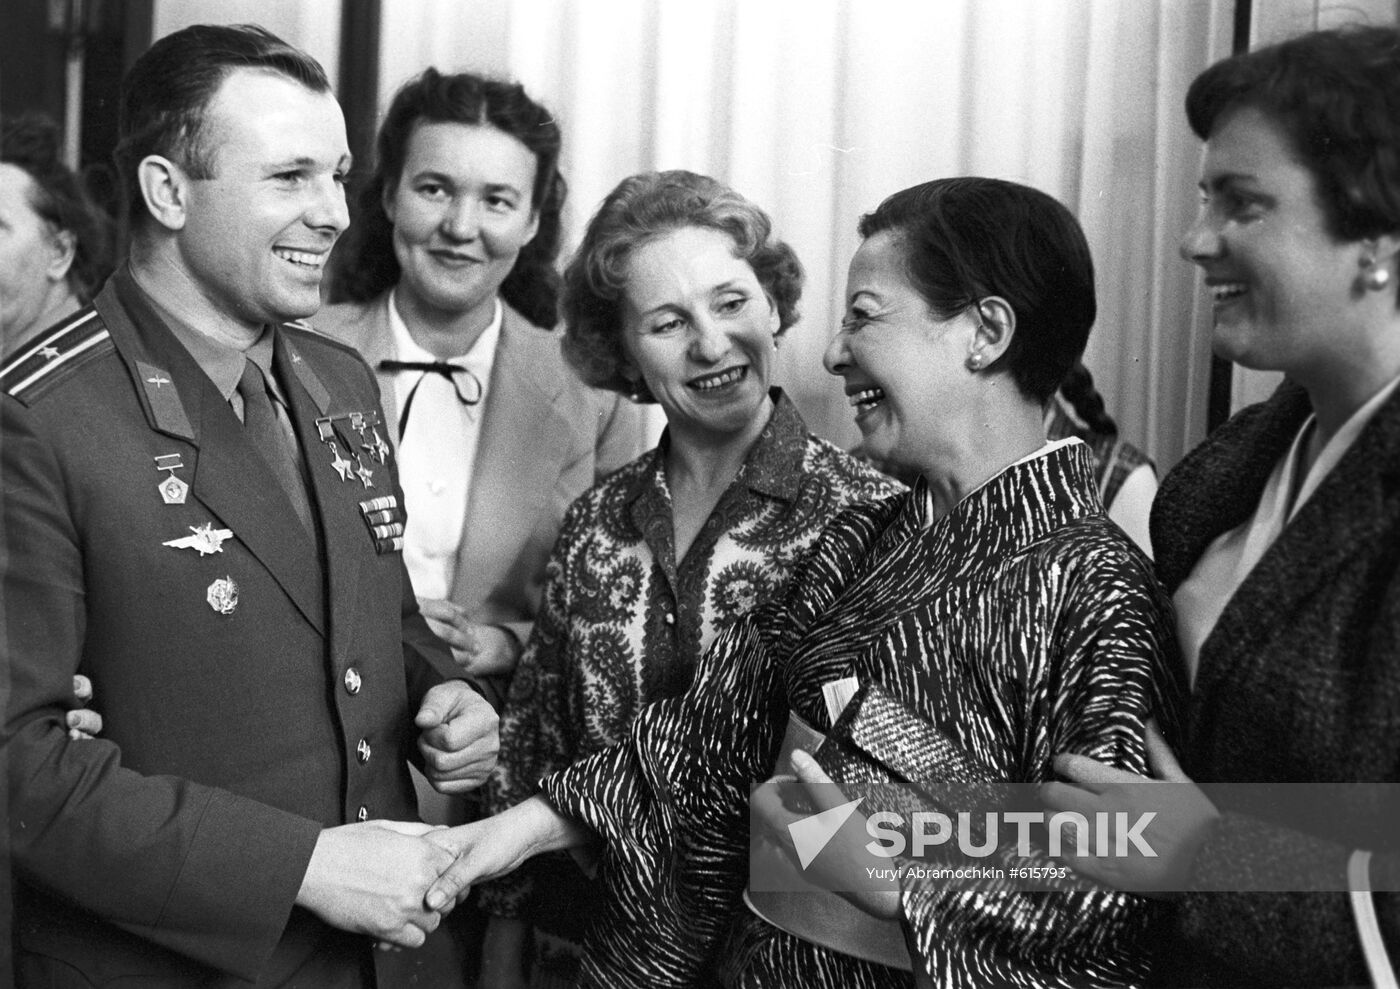 Yury Gagarin, Olga Lepeshinskaya and Okada Yosiko